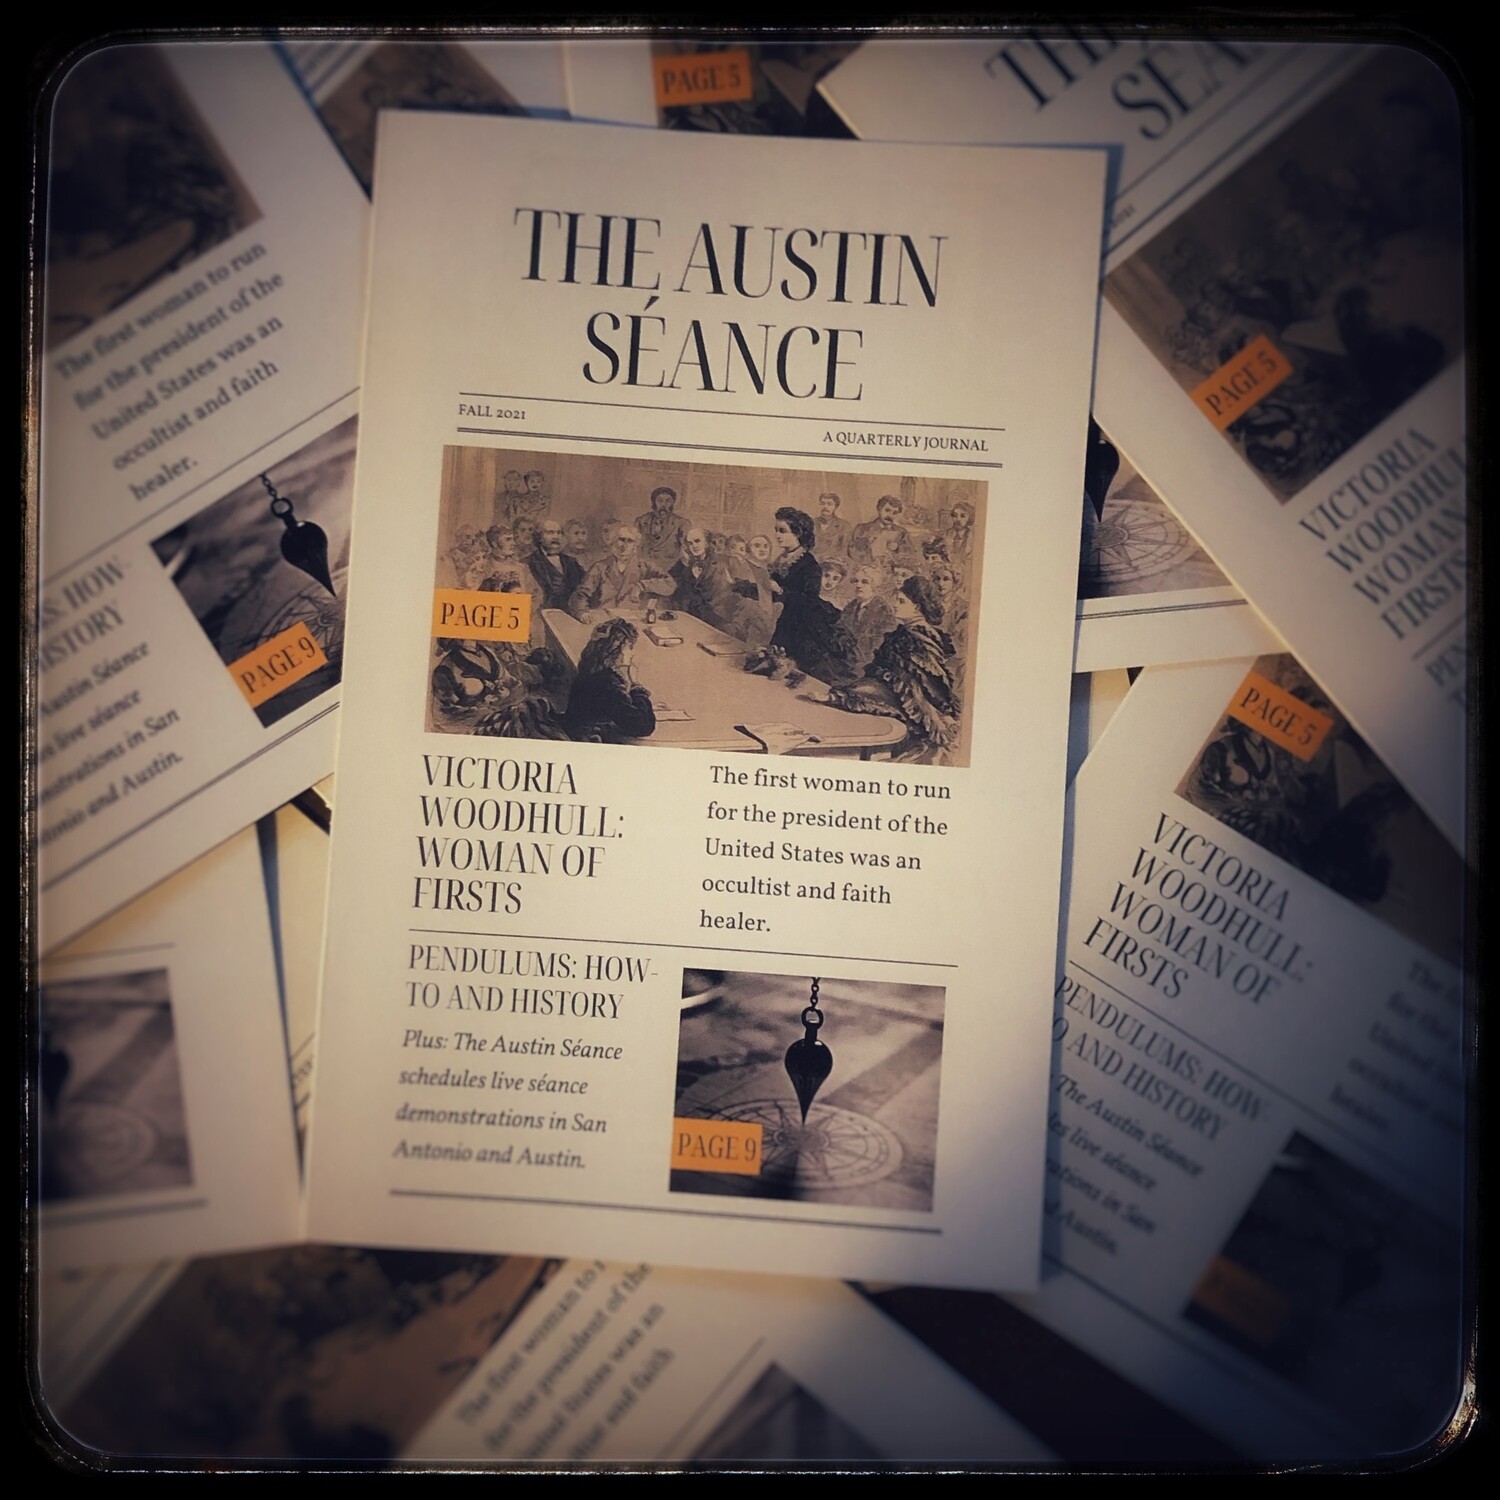 The Austin Séance Quarterly Journal Subscription